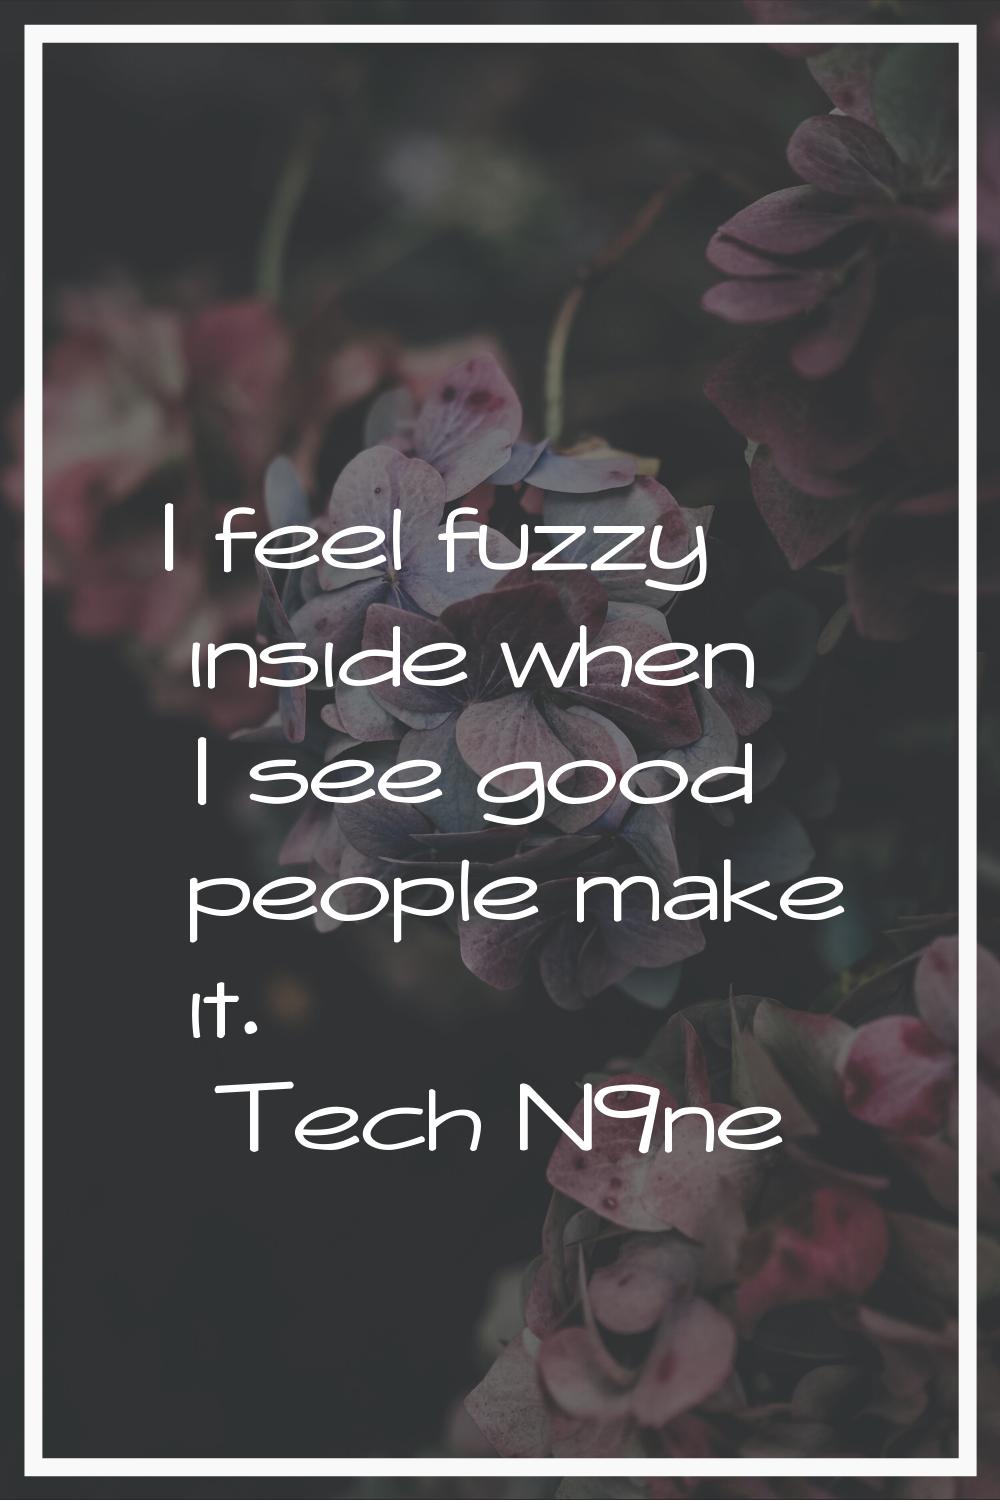 I feel fuzzy inside when I see good people make it.